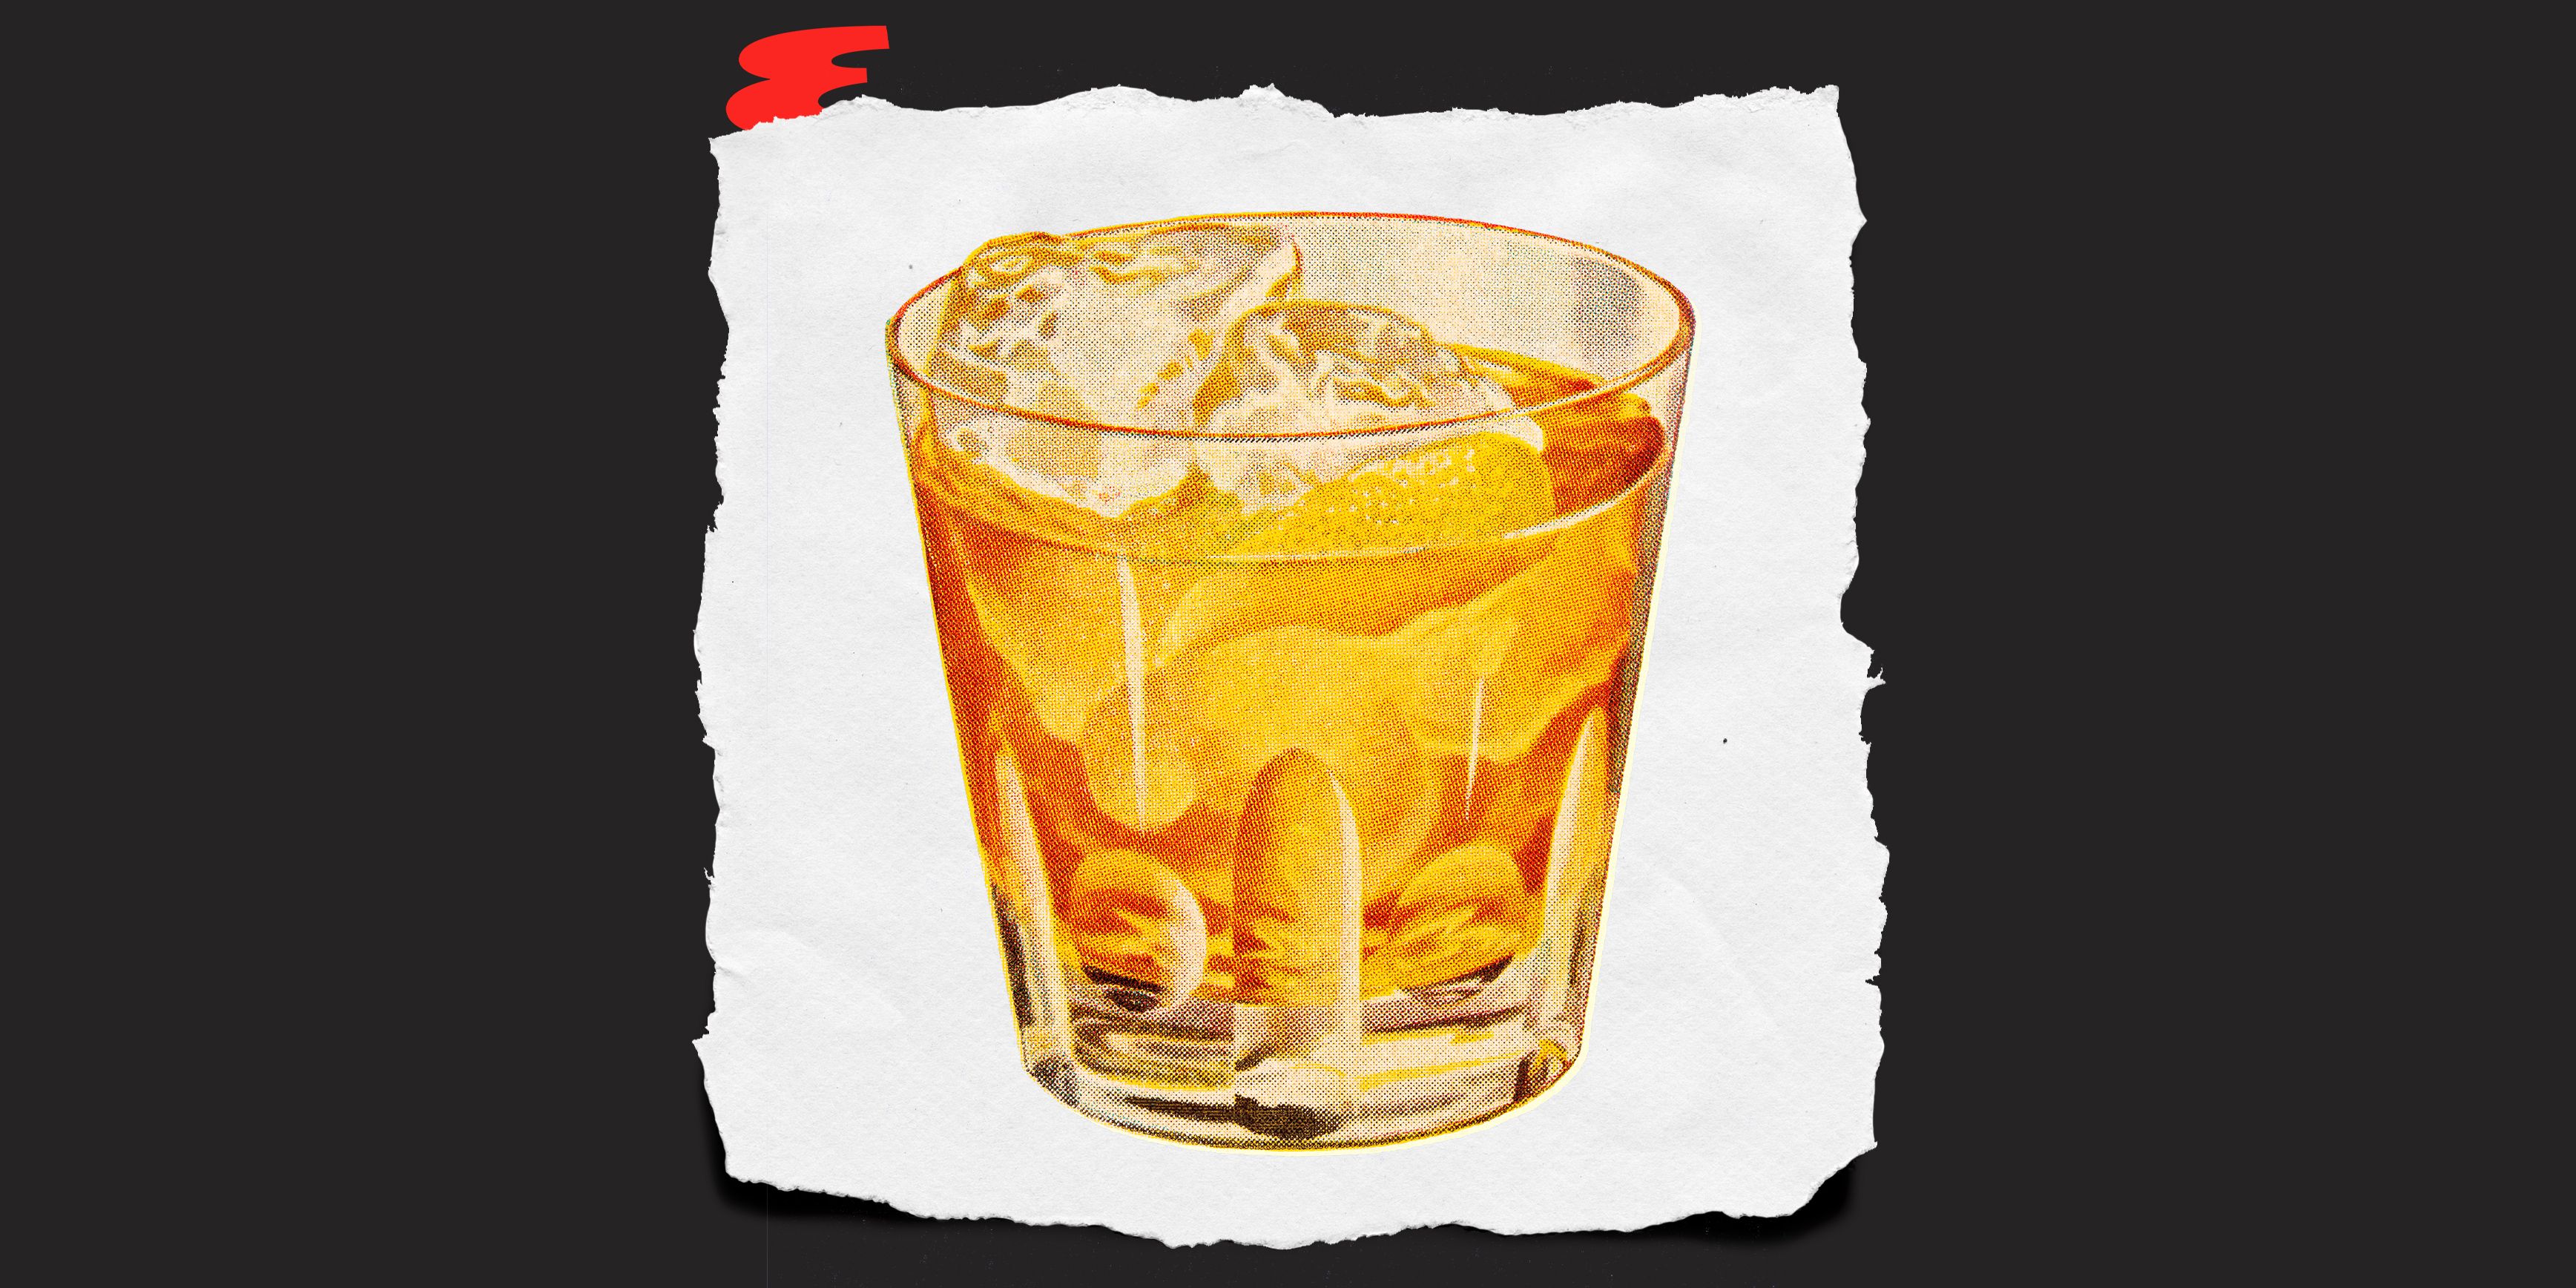 Beginner Cocktails: 6 Drinks to Master